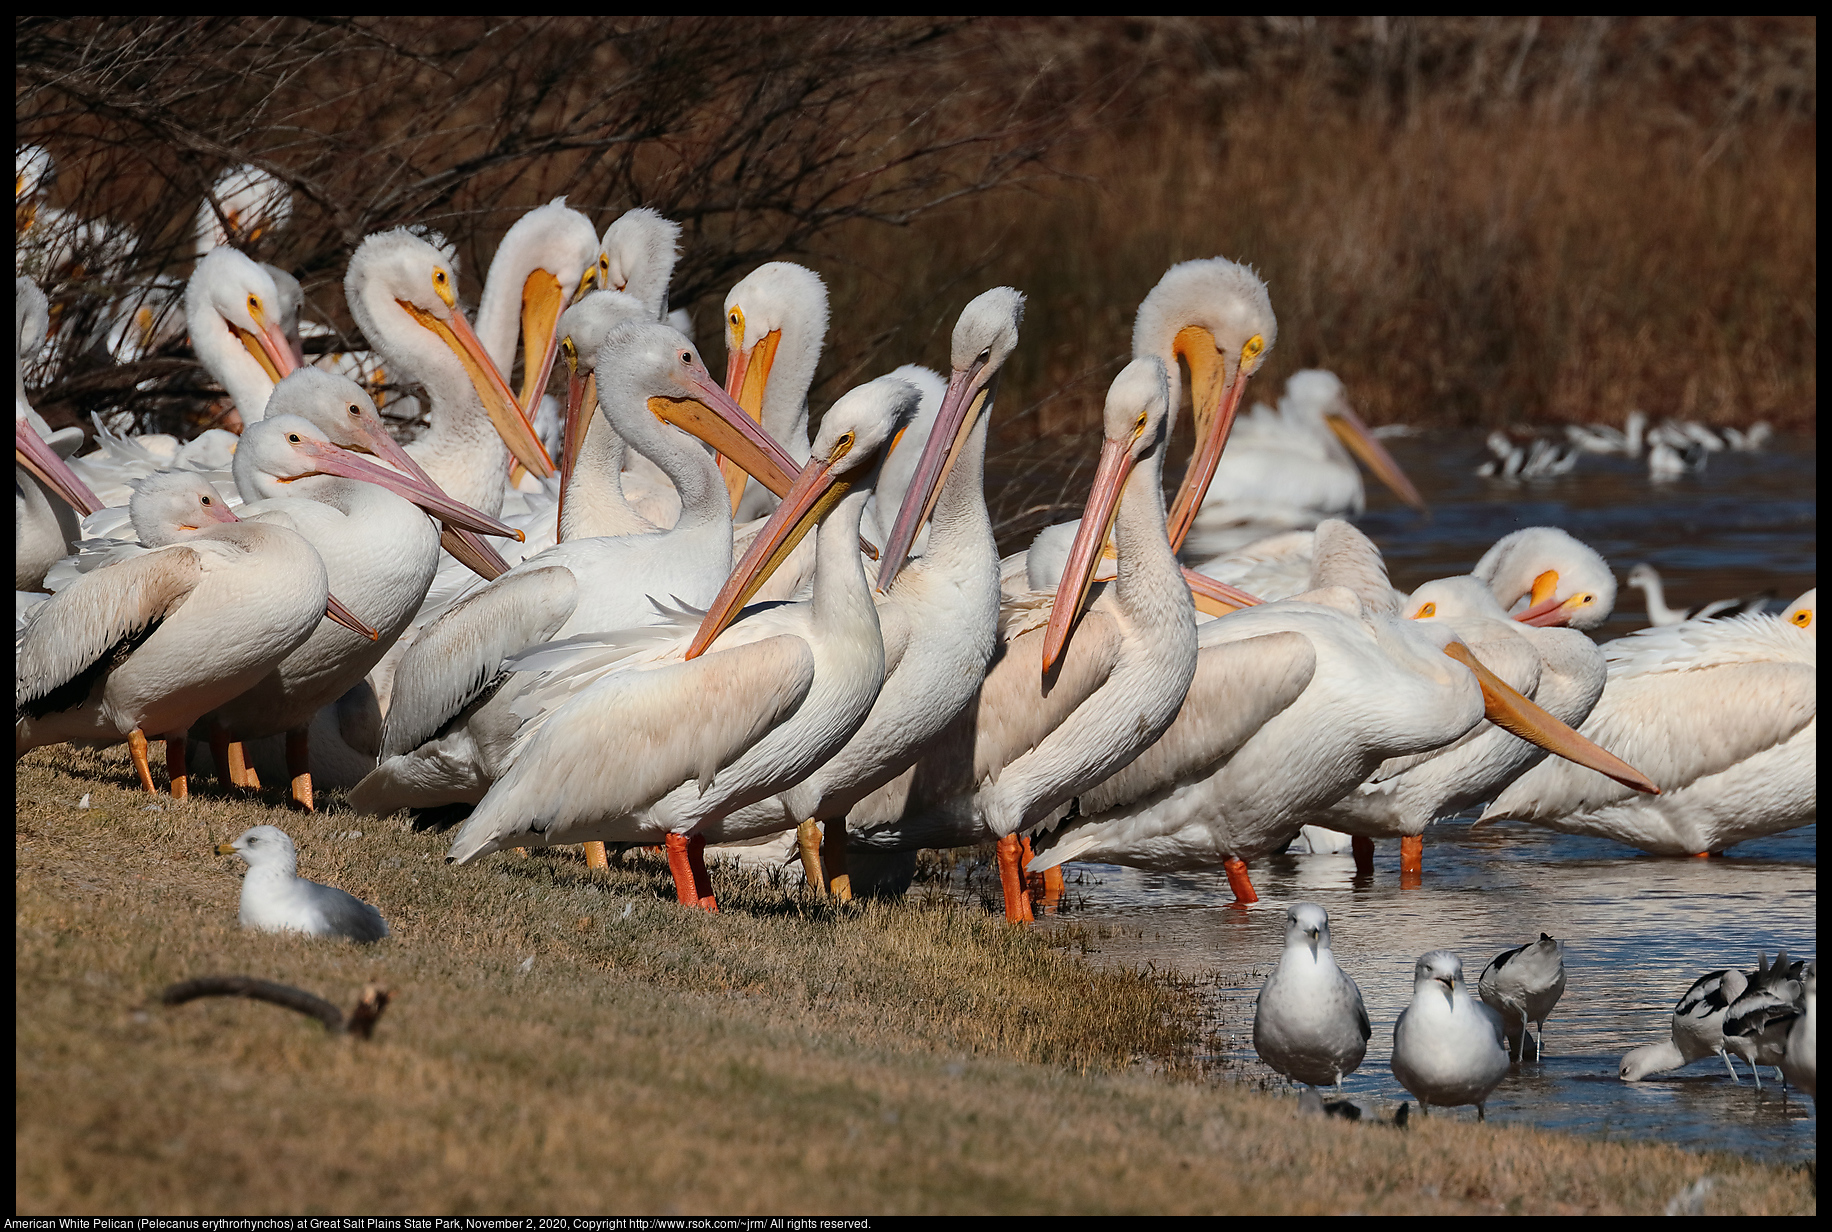 American White Pelicans (Pelecanus erythrorhynchos) at Great Salt Plains State Park, November 2, 2020